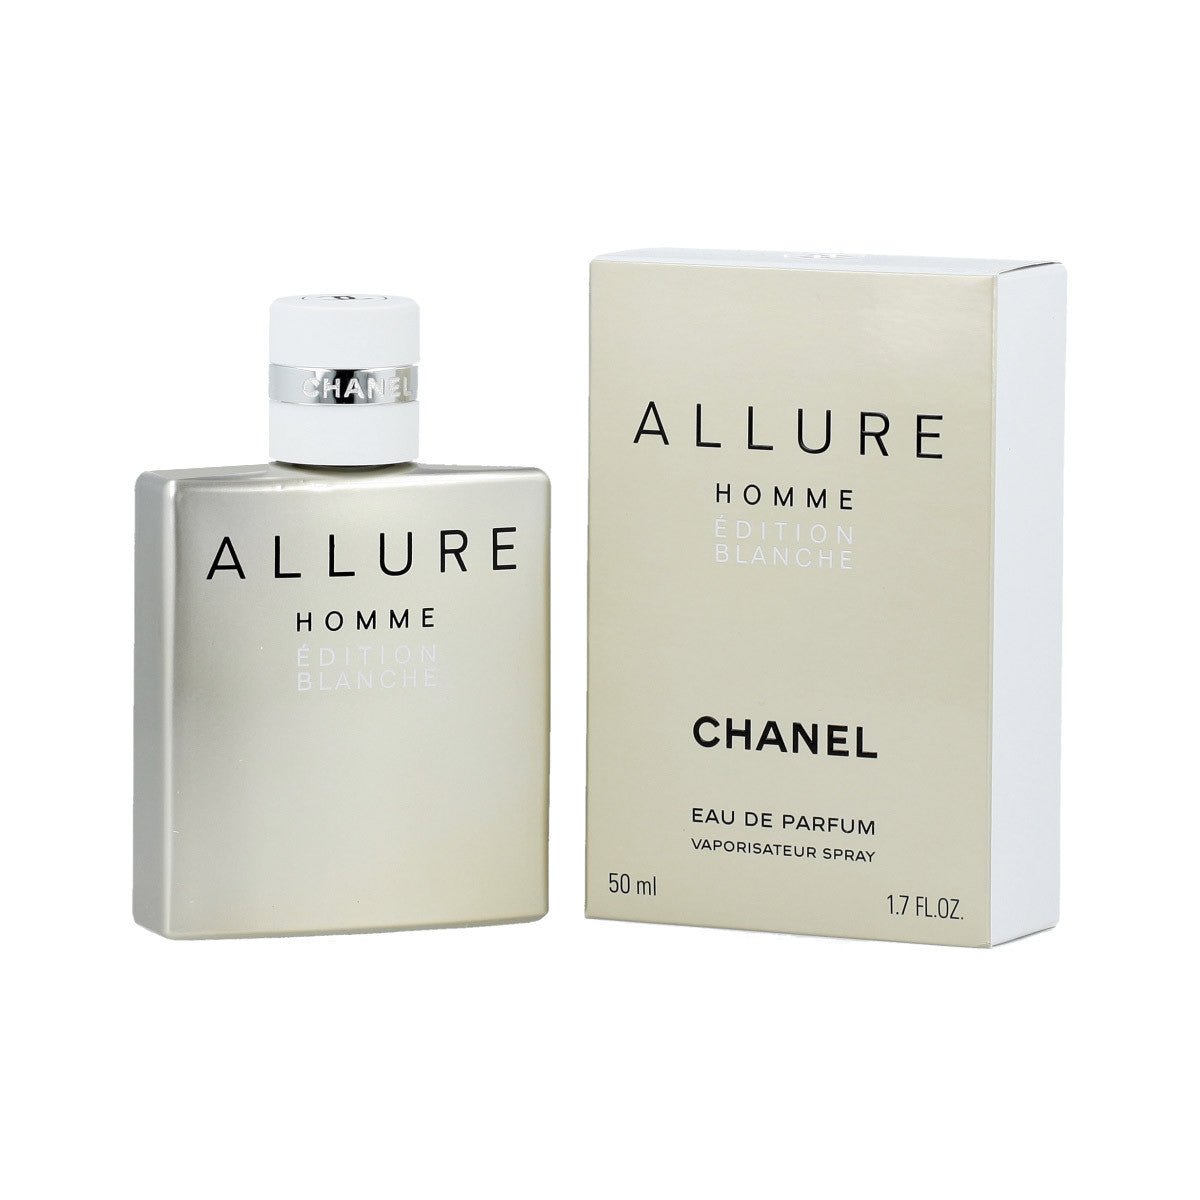 Chanel Allure Homme Edition Blanche EDP | My Perfume Shop Australia